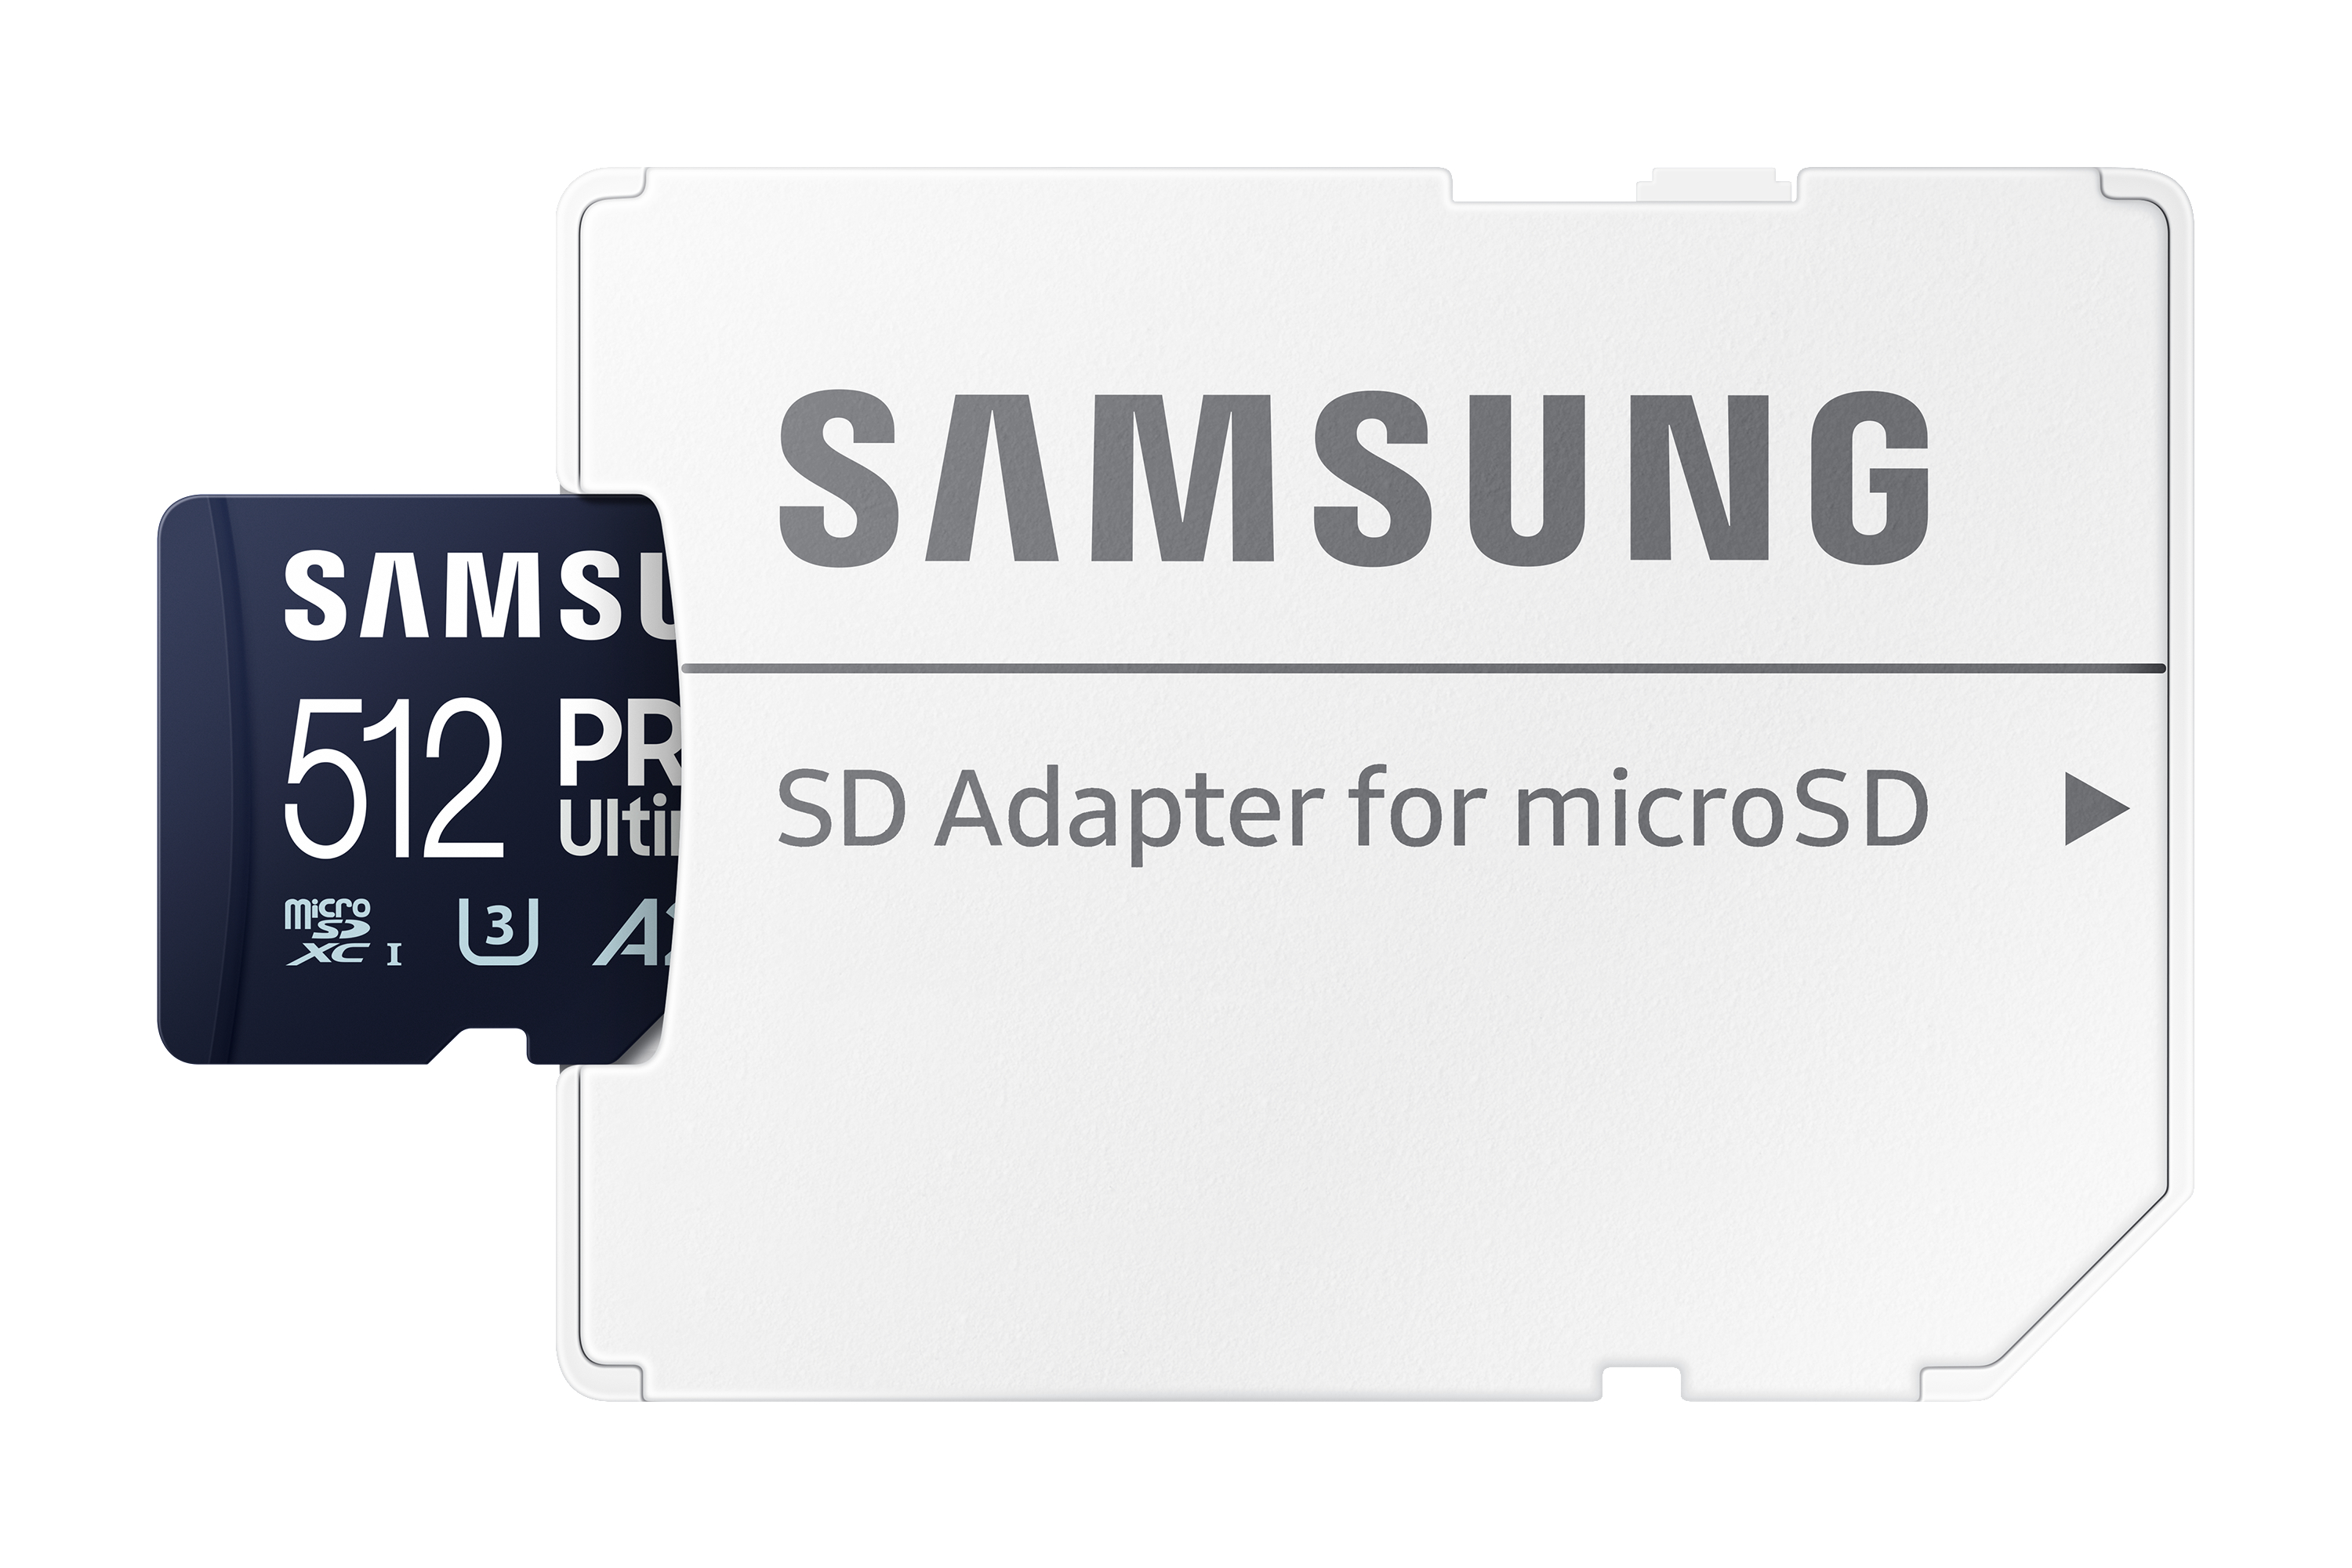 MB/s Ultimate, SAMSUNG PRO 200 Micro-SD Speicherkarte, 512 GB,